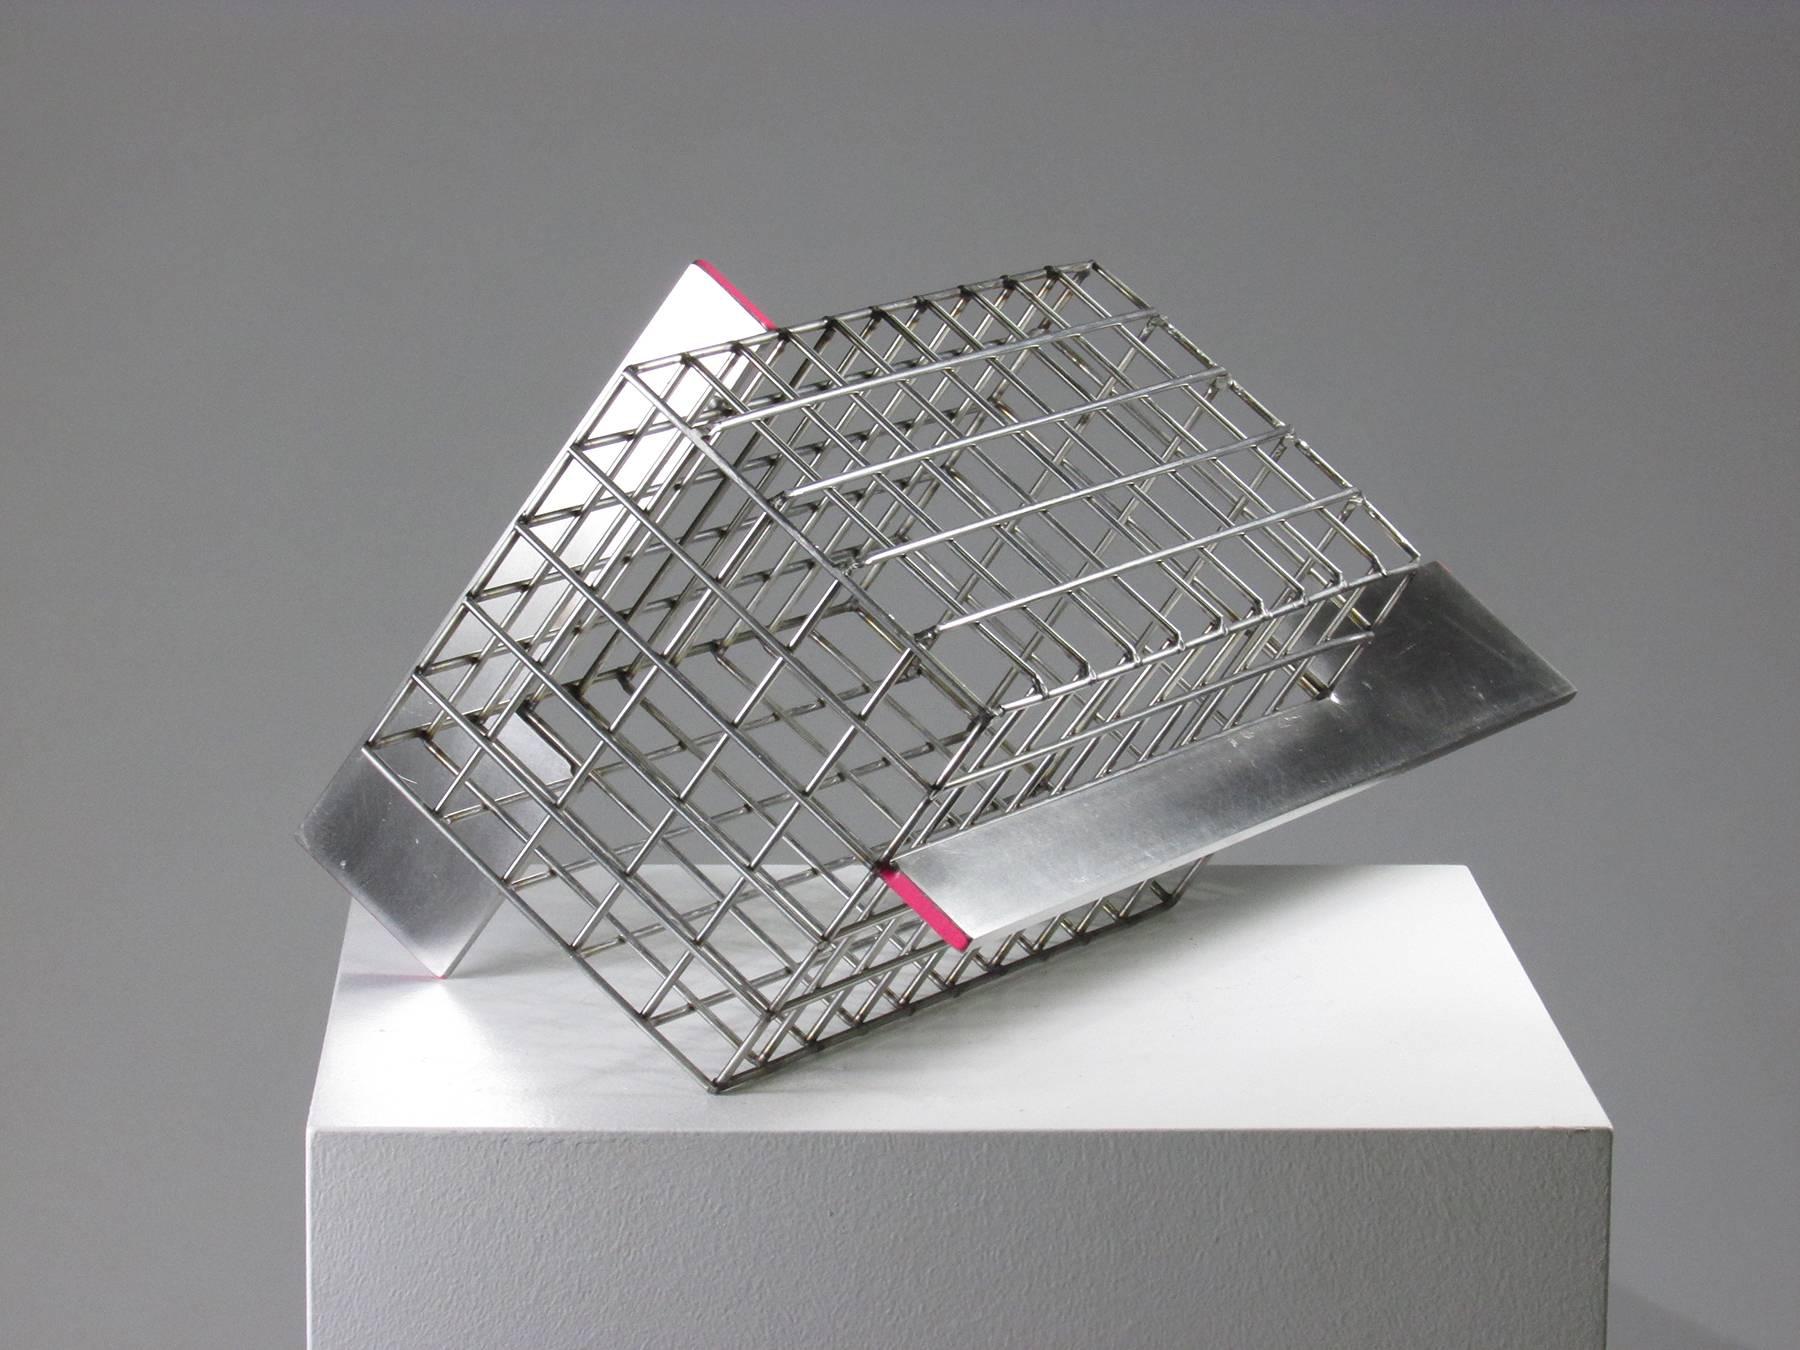 Edwin Salmon Abstract Sculpture - "304 Stainless Flat" - Abstract Stainless Steel Sculpture